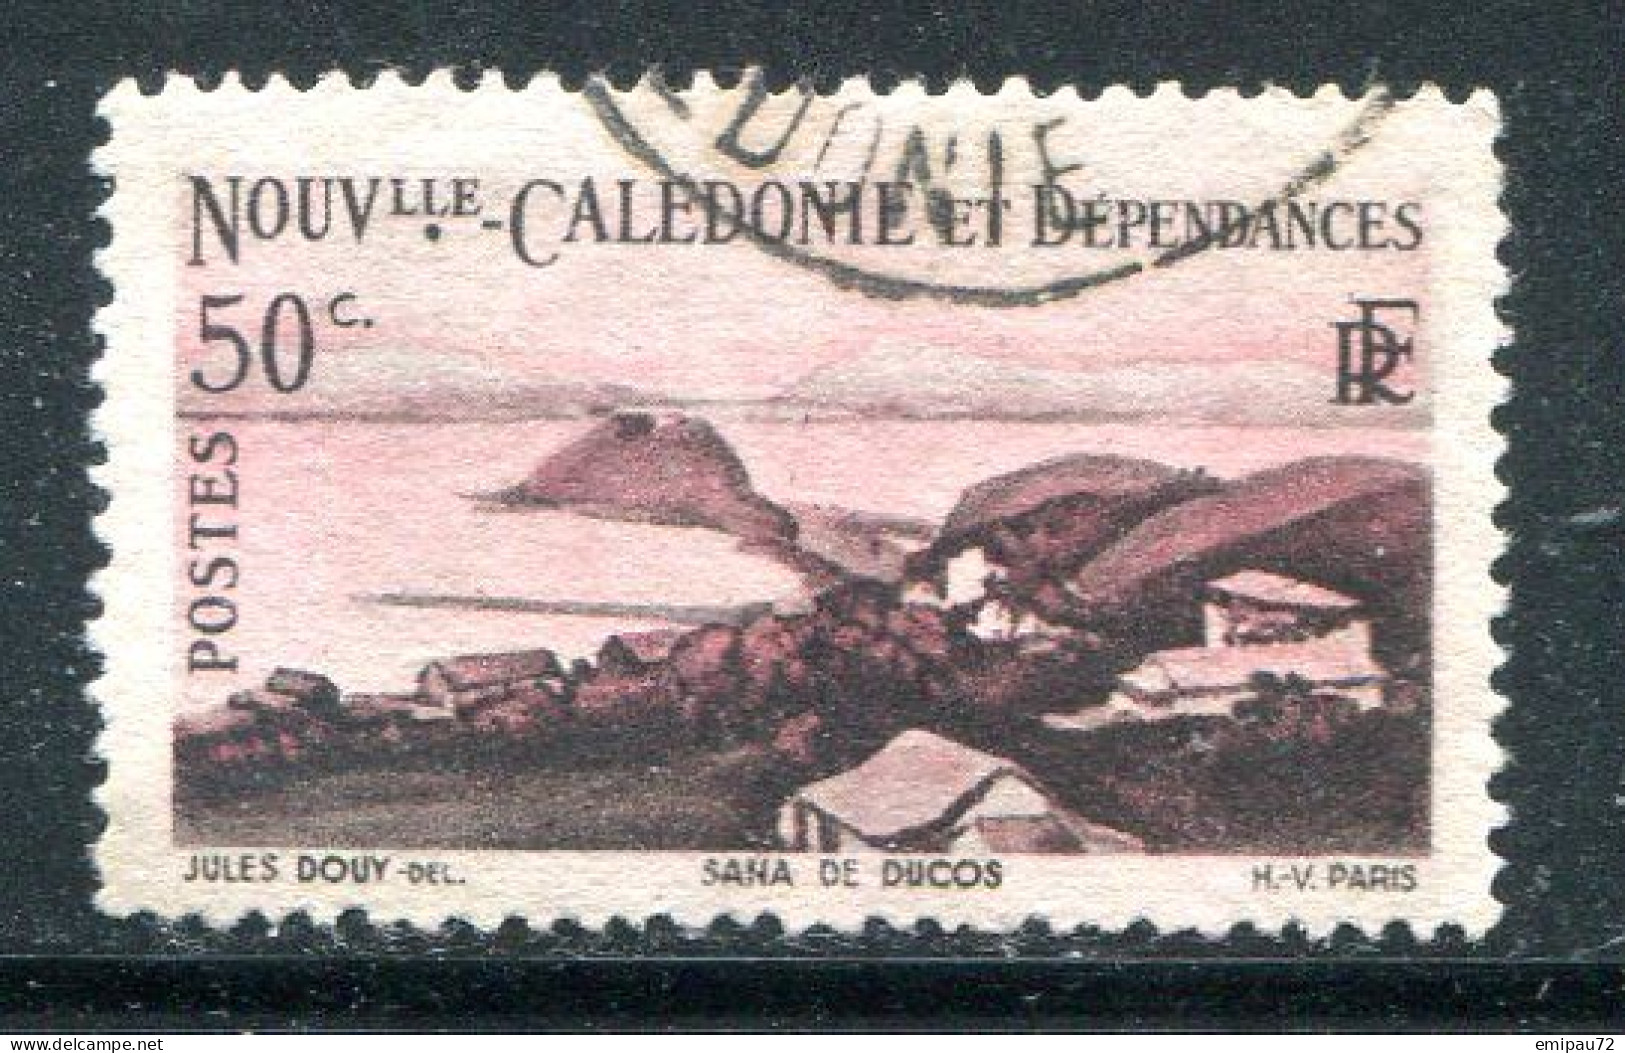 NOUVELLE CALEDONIE- Y&T N°262- Oblitéré - Used Stamps